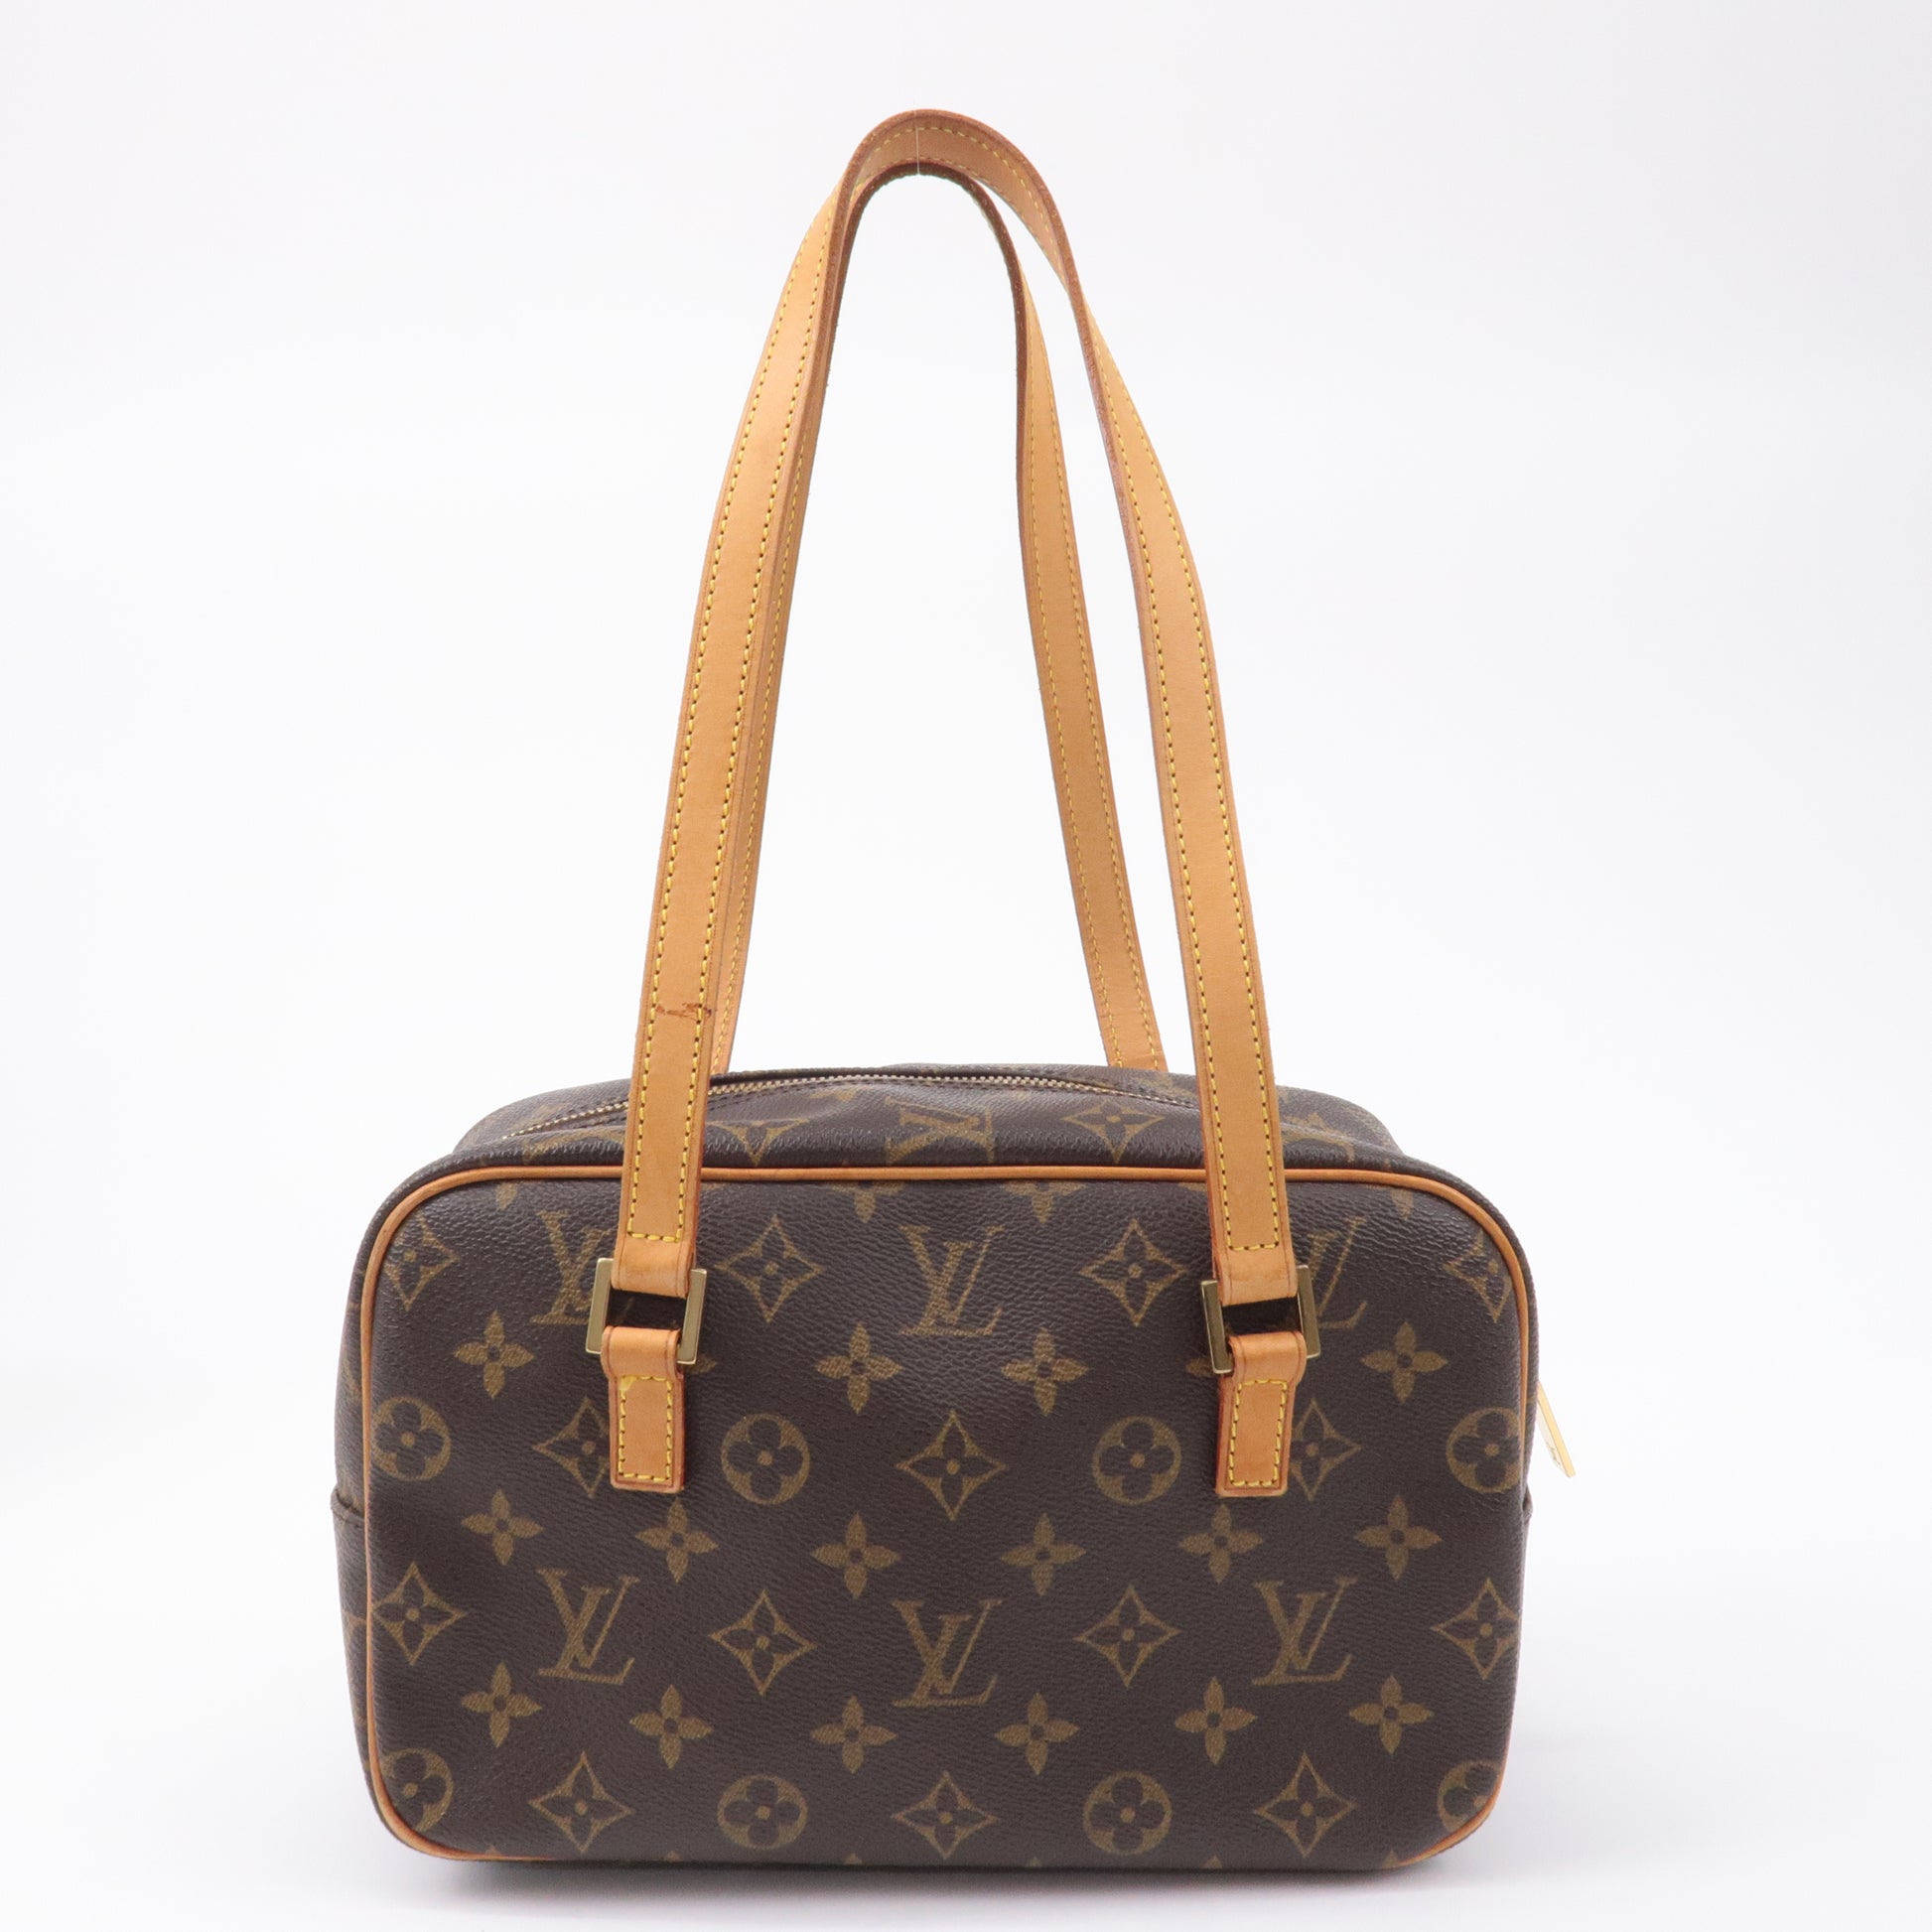 Stunning Louis Vuitton Handbag Designer Leather Monogram Bag -  Israel